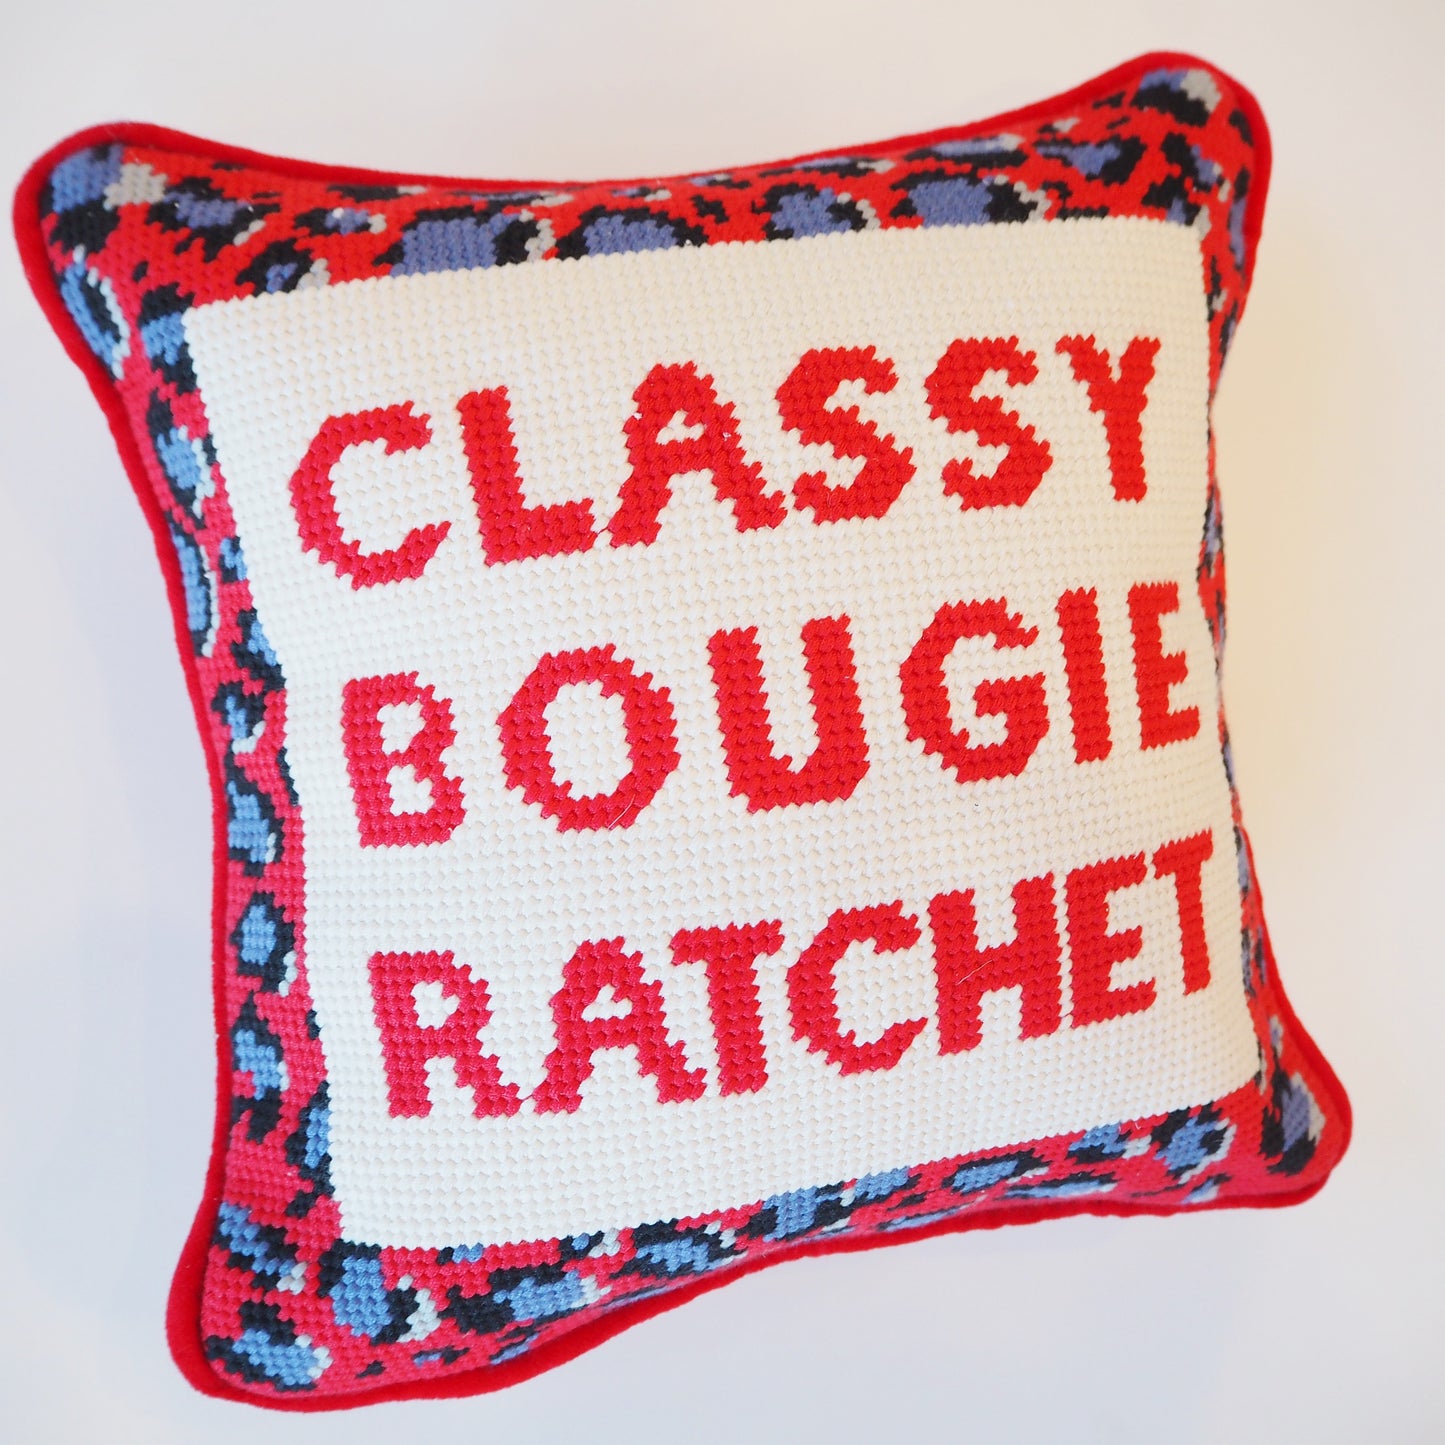 Classy, Bougie, Ratchet Needle Point Pillow